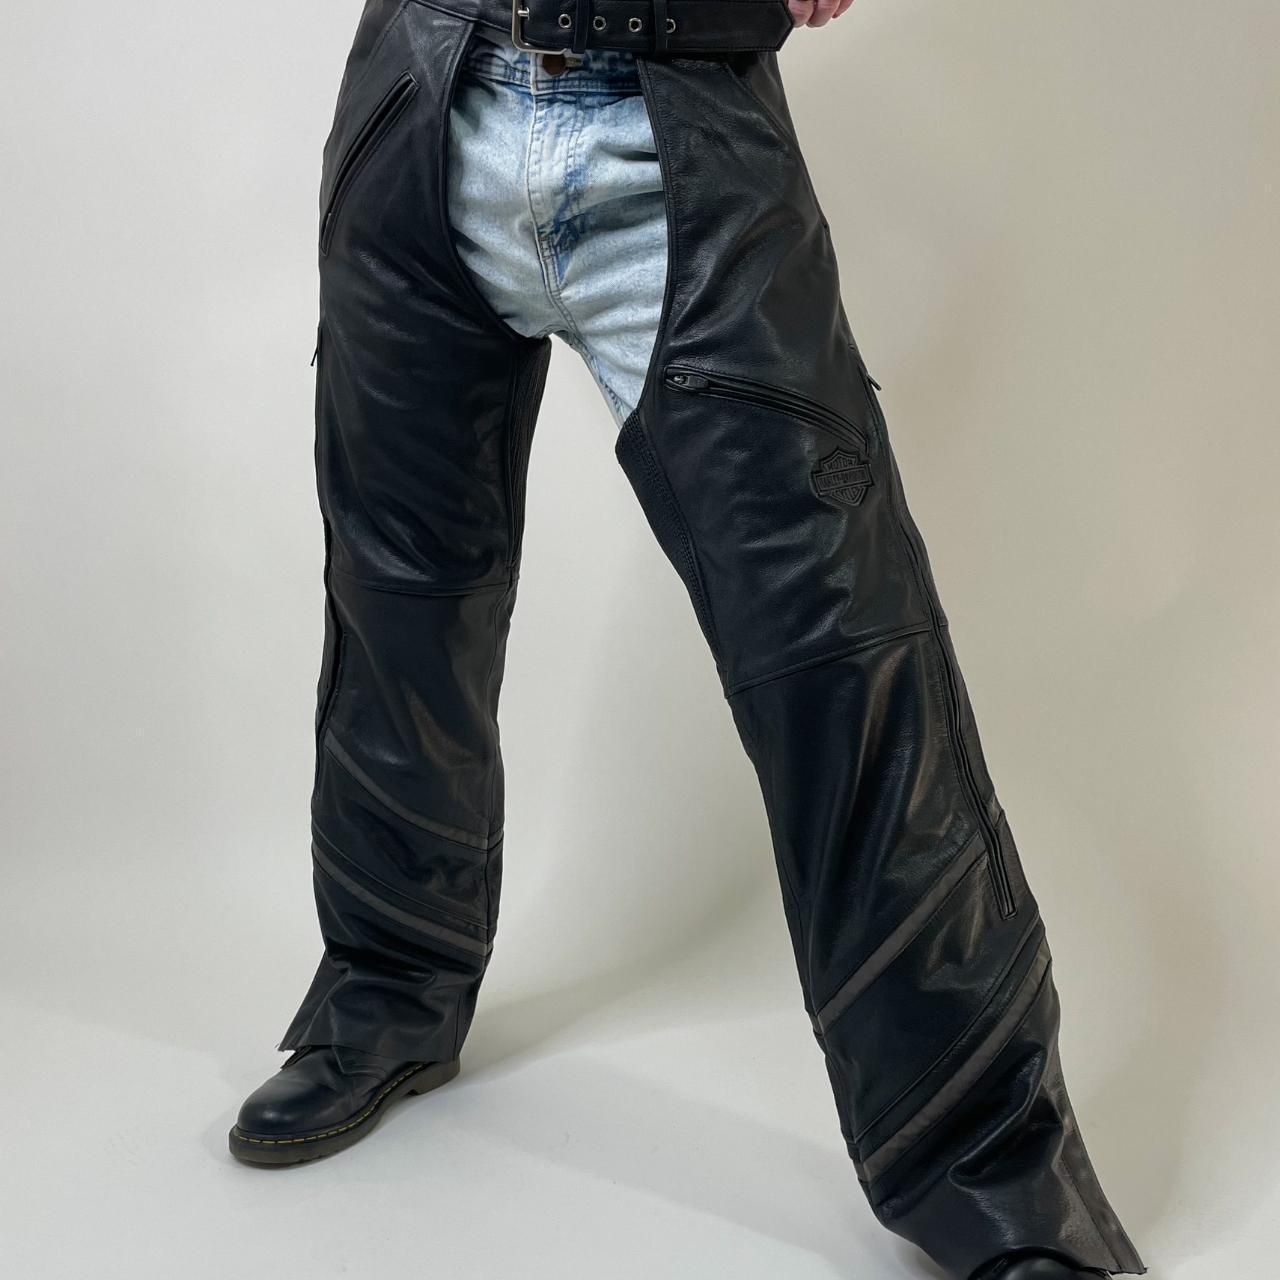 Genuine HARLEY DAVIDSON Black Leather Riding Chaps Pants